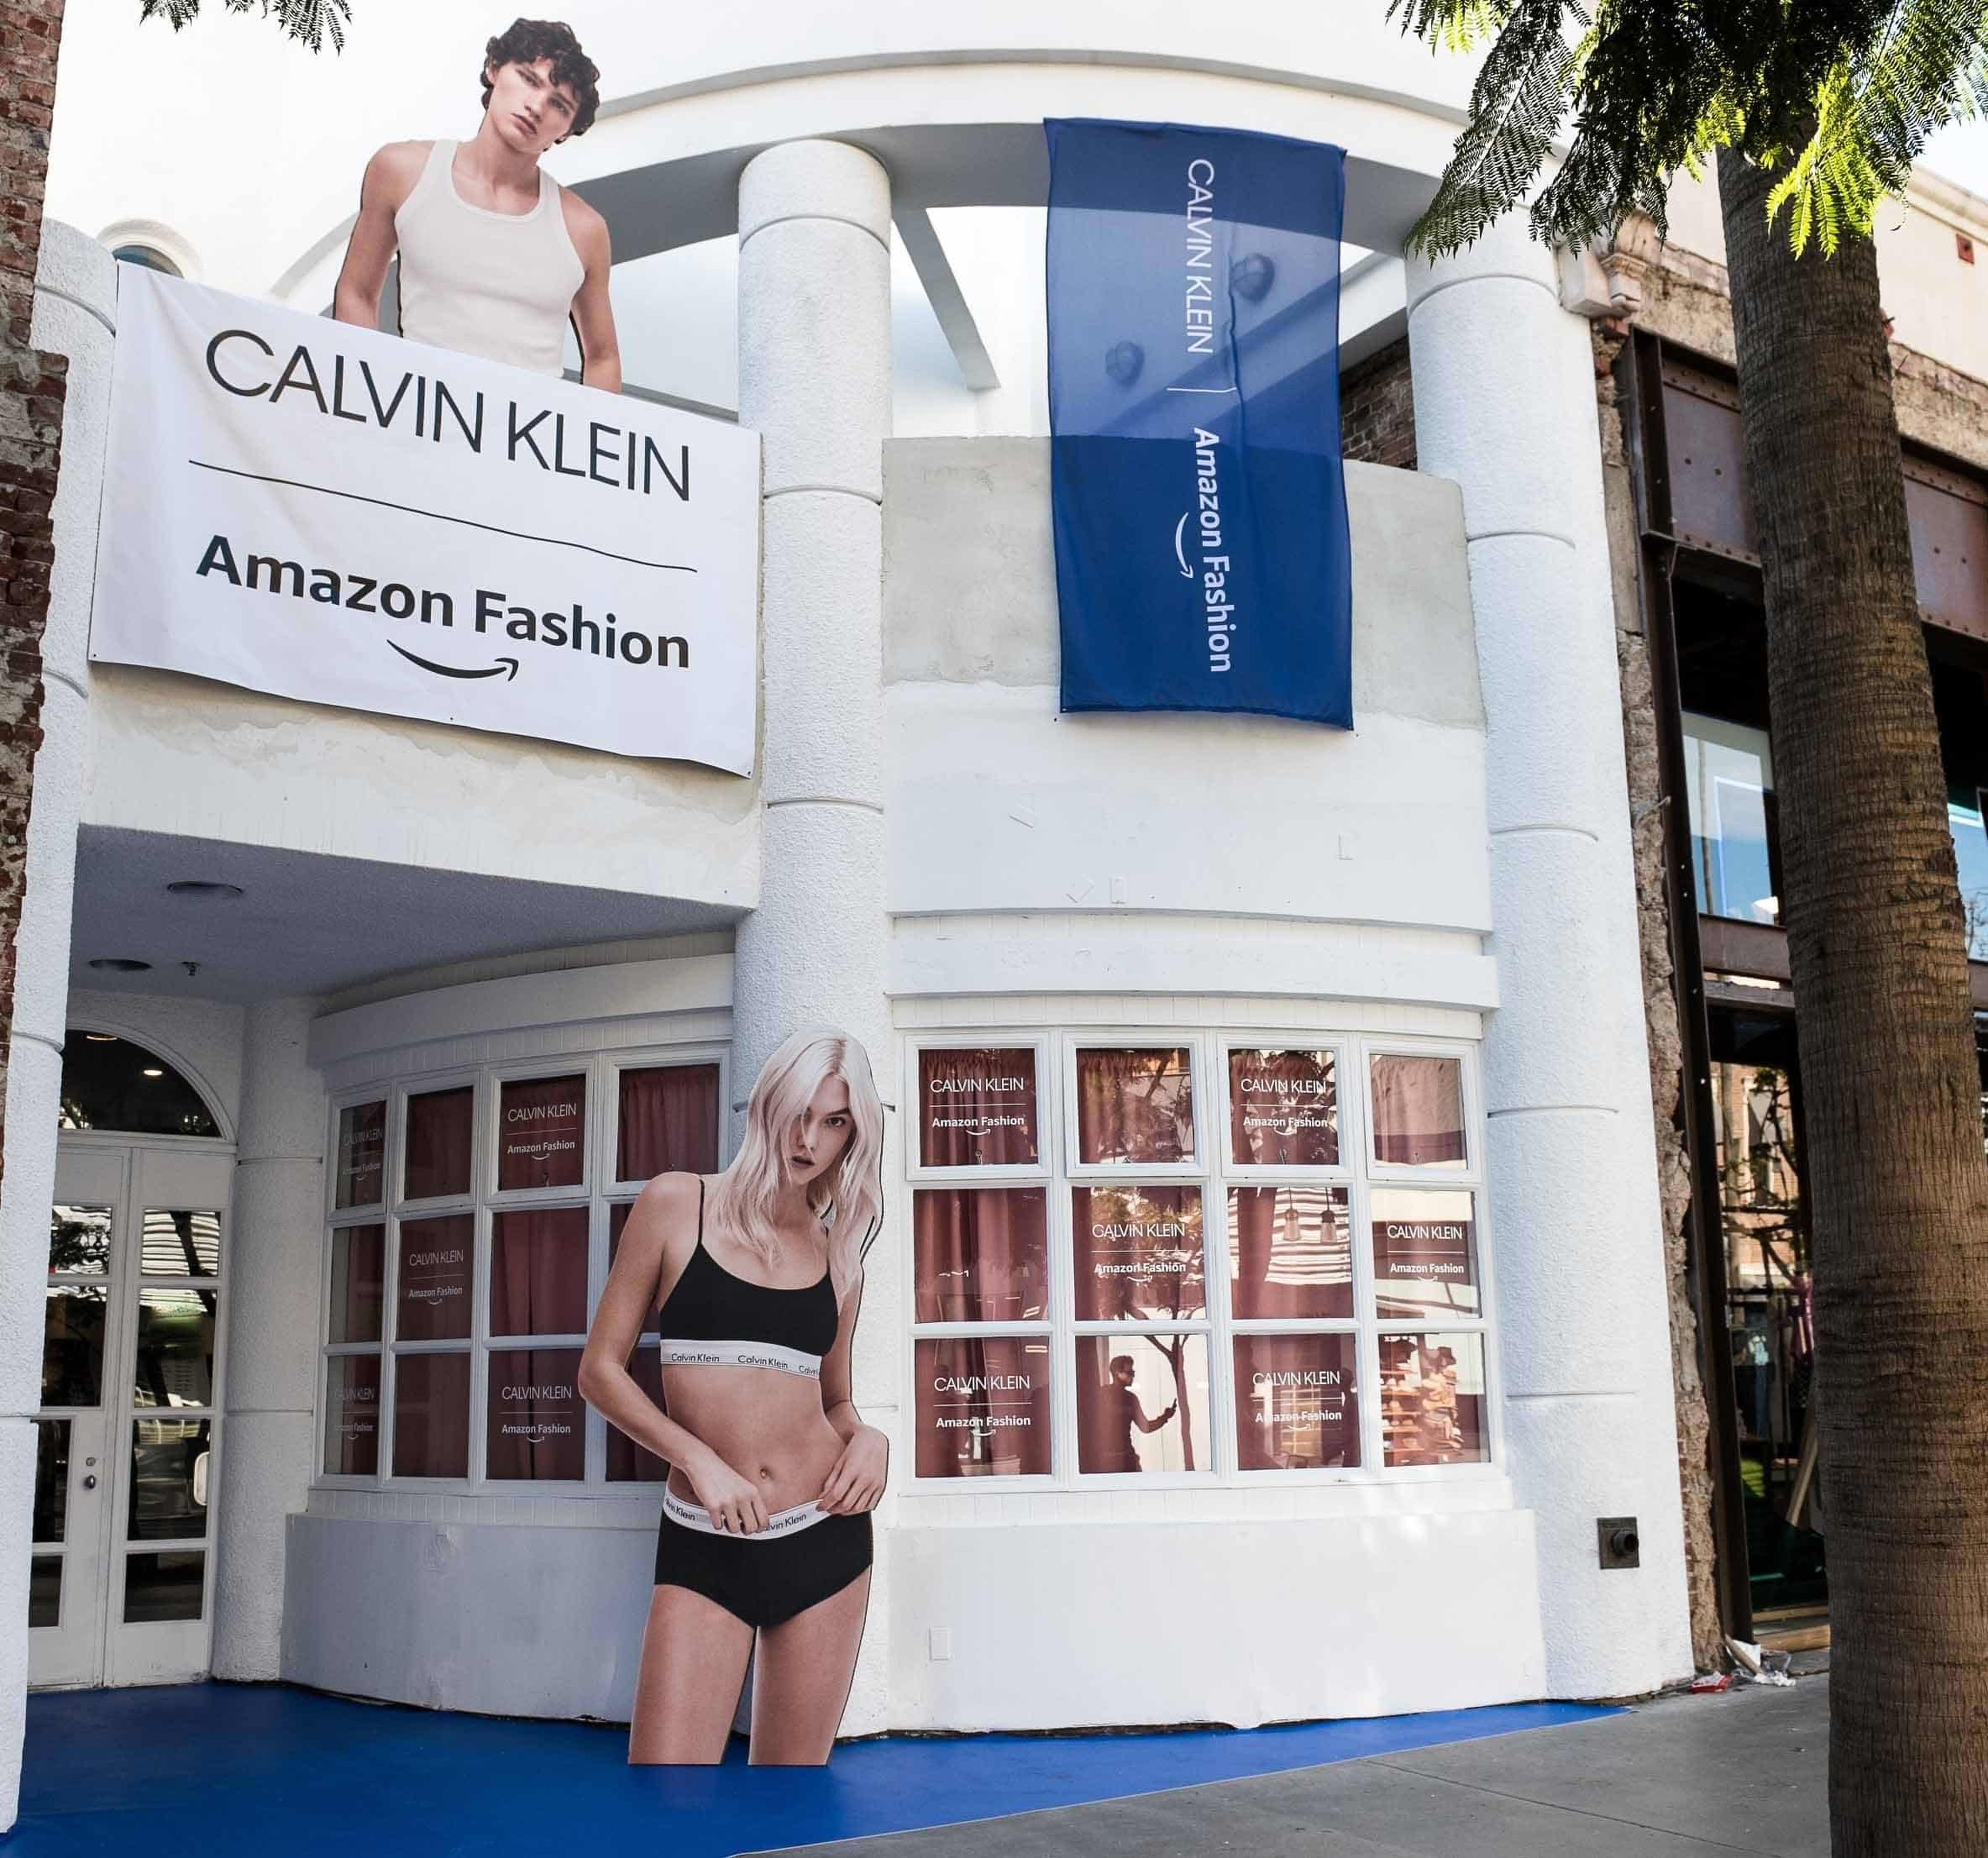 Tienda pop-up Calvin Klein-Amazon